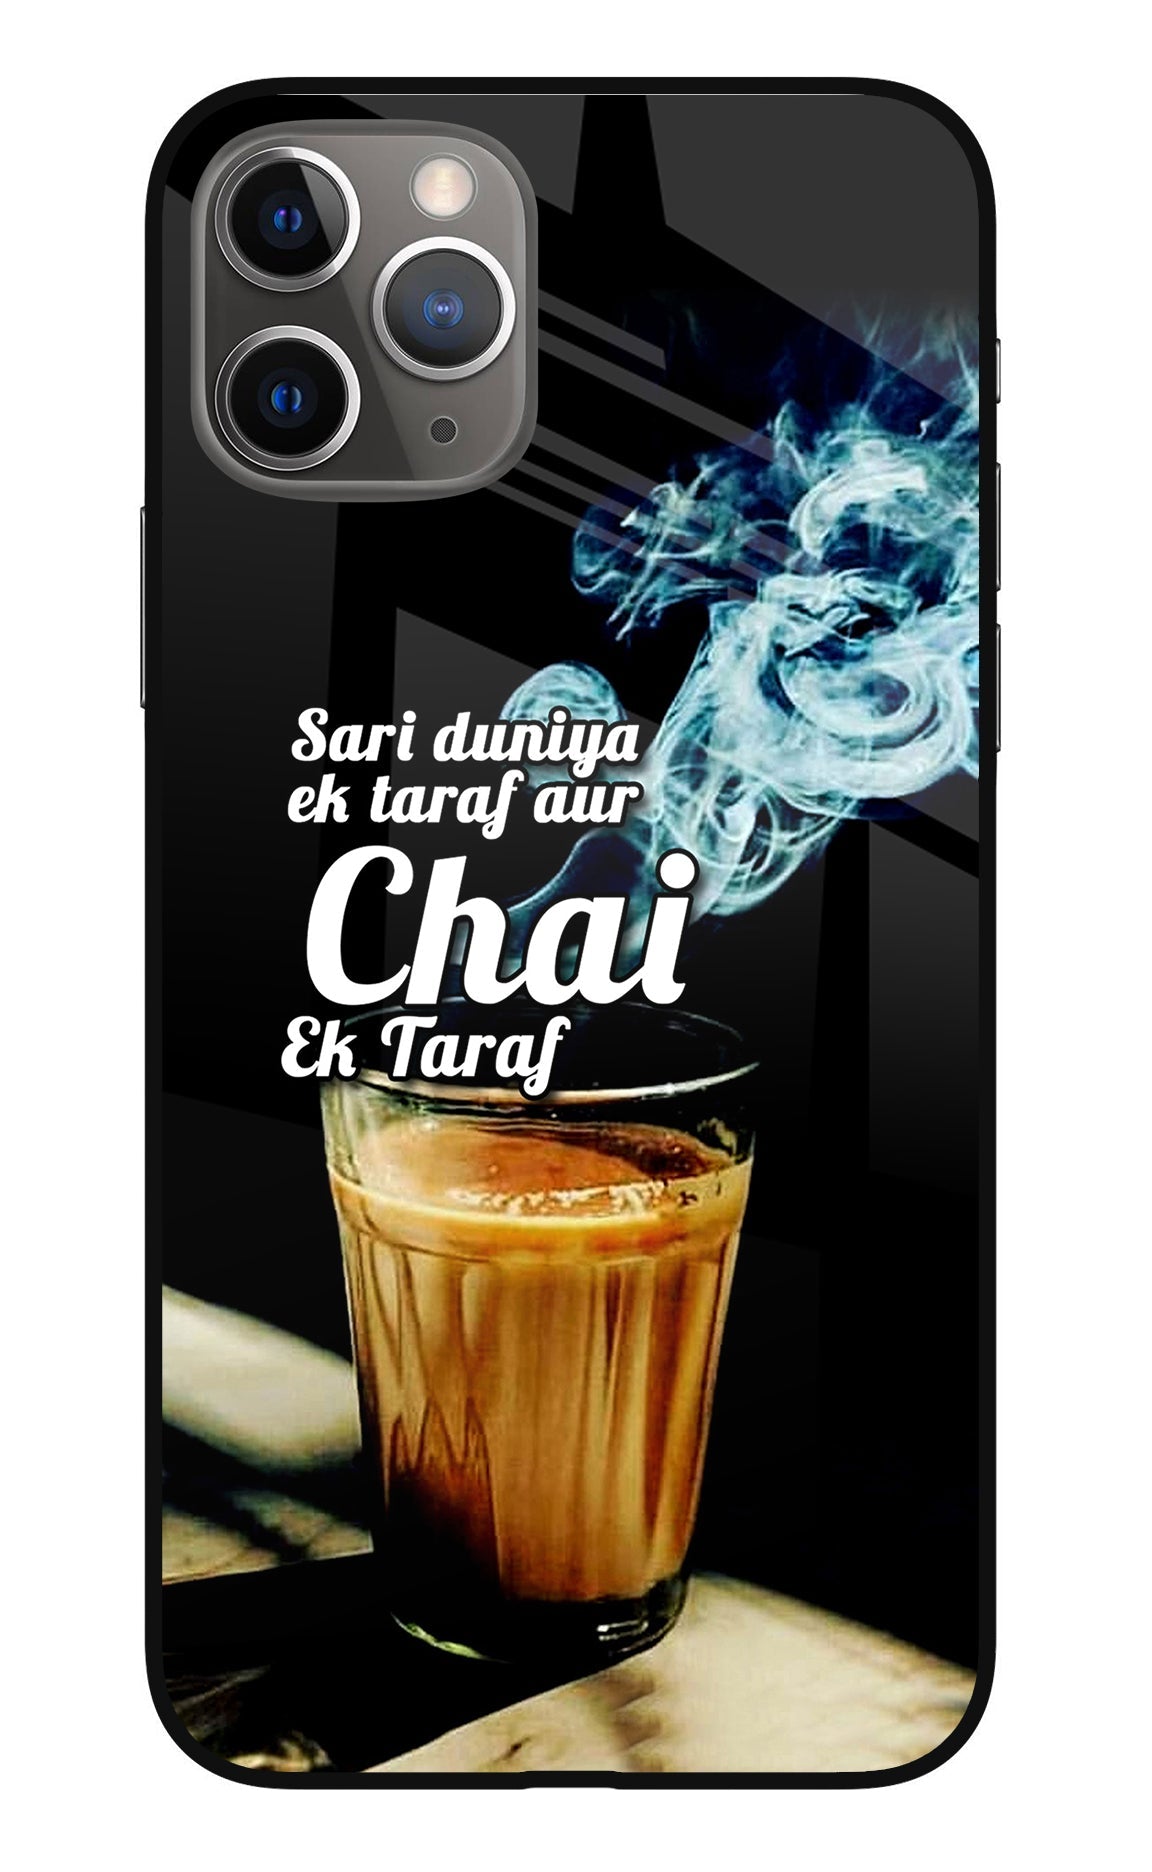 Chai Ek Taraf Quote iPhone 11 Pro Glass Case